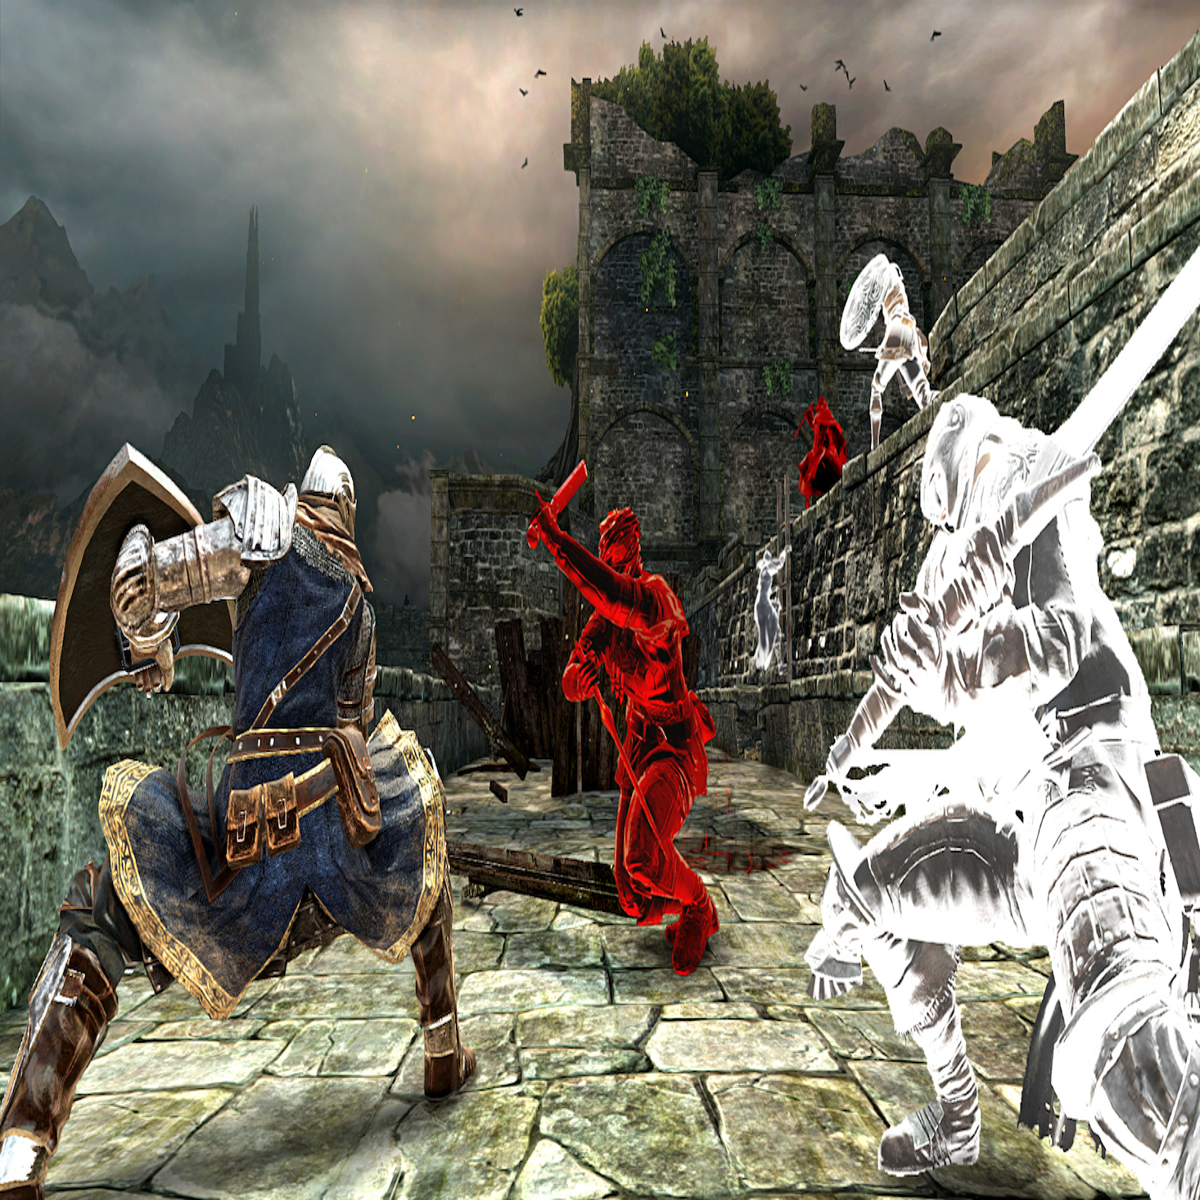 Steam Workshop::Dark Souls II Music Overhaul